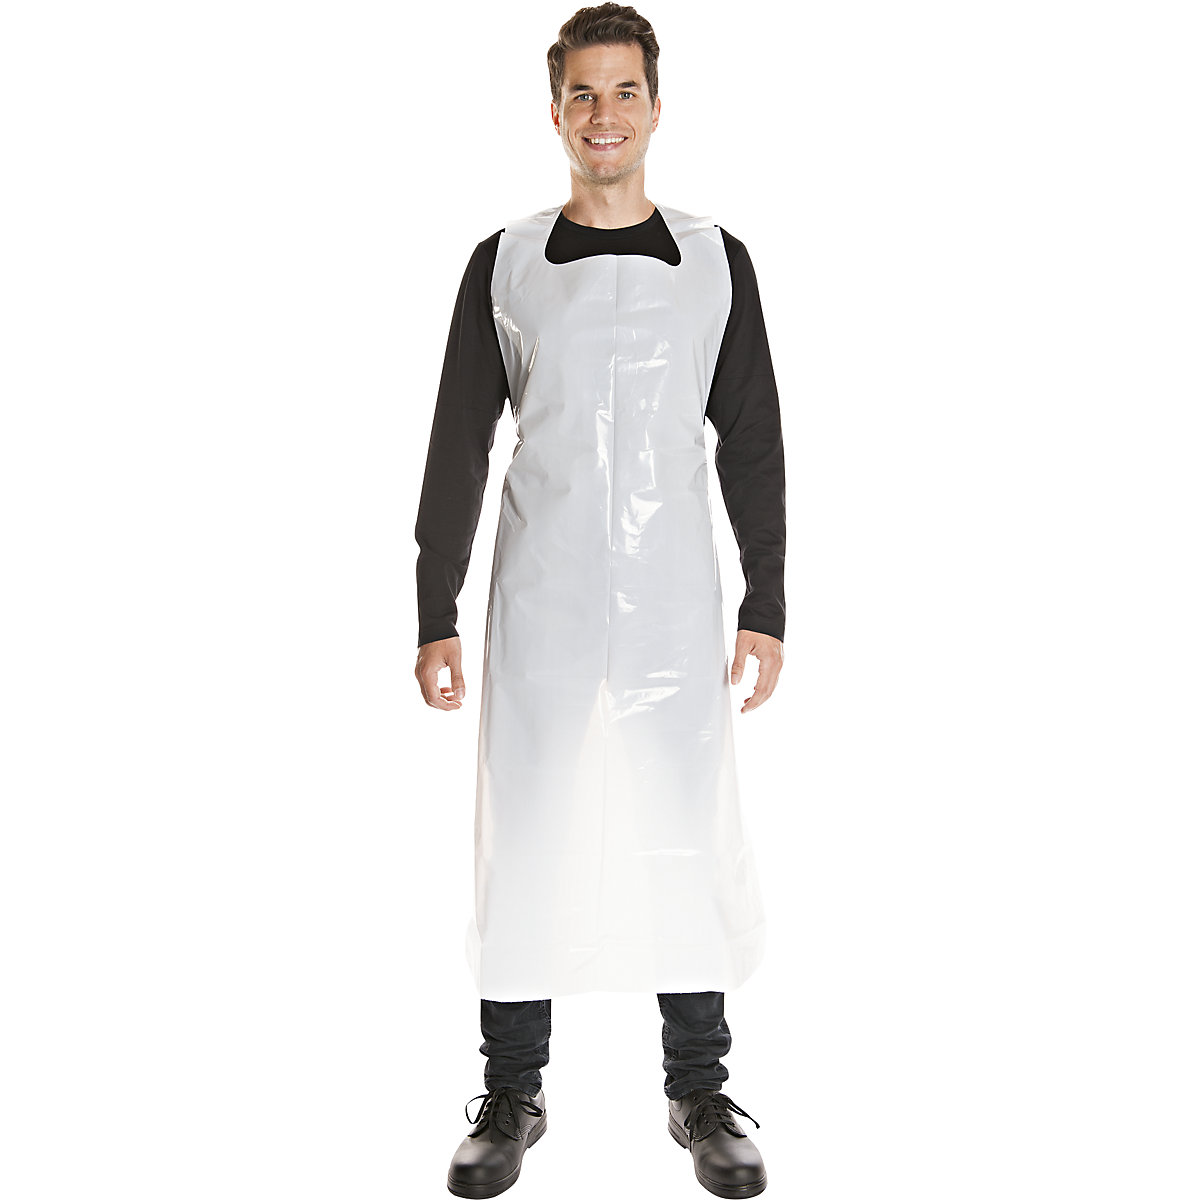 LDPE disposable apron, white